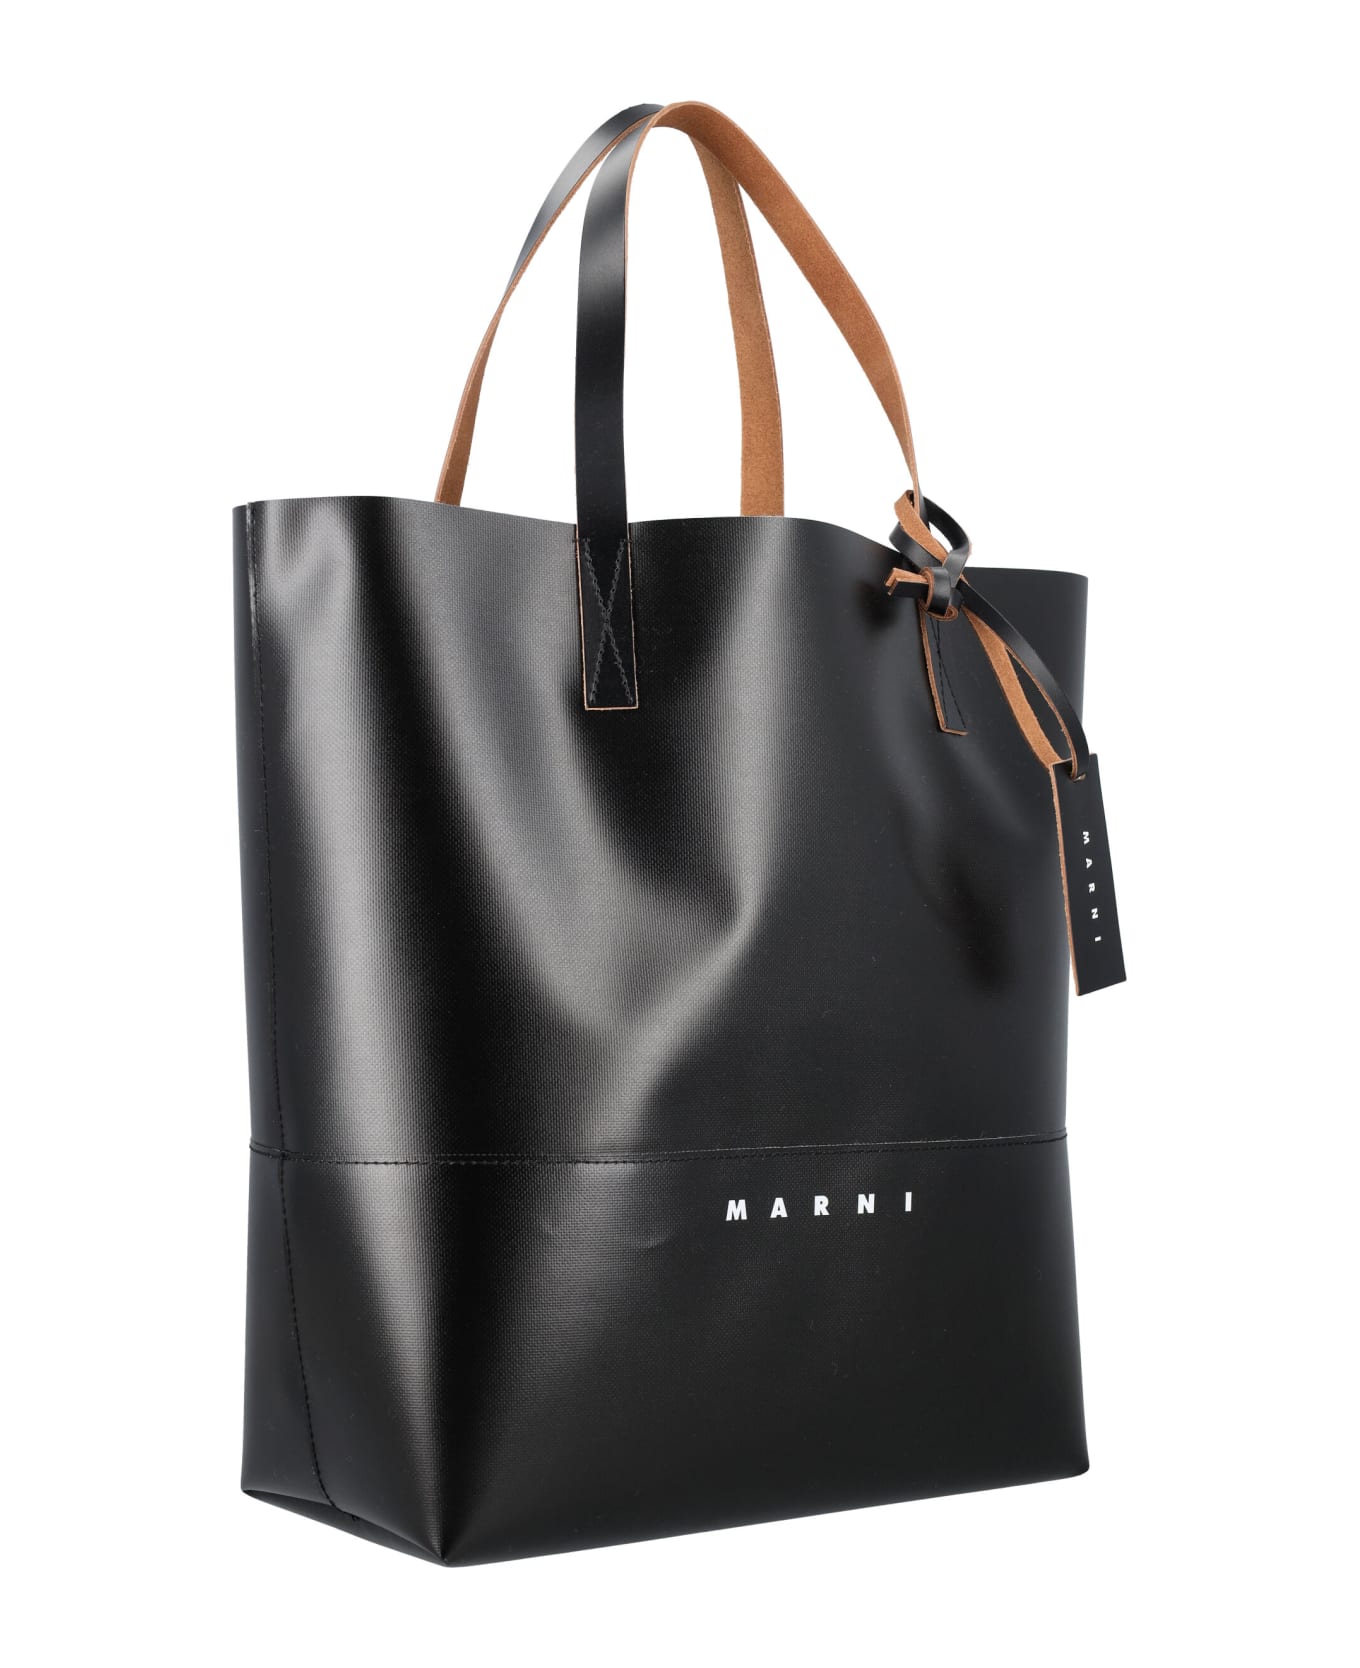 Marni Tribeca Shopping Bag - BLACK